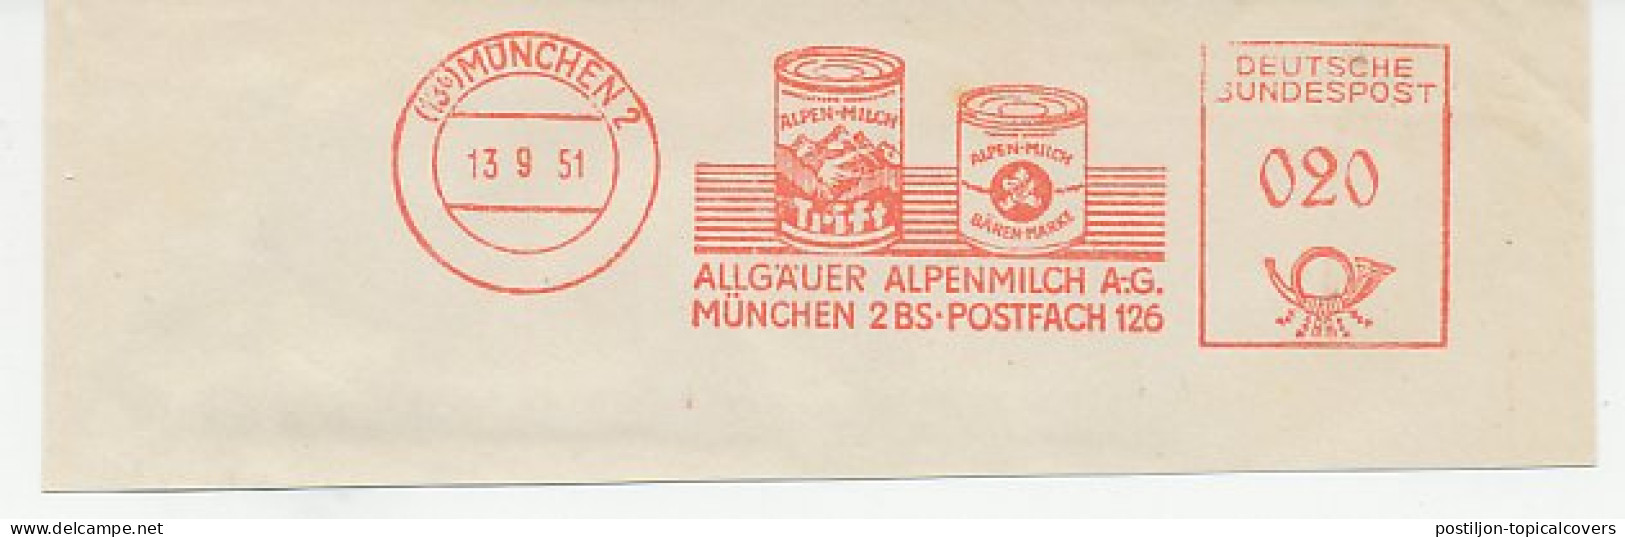 Meter Cut Germany 1951 Alpine Milk - Ernährung